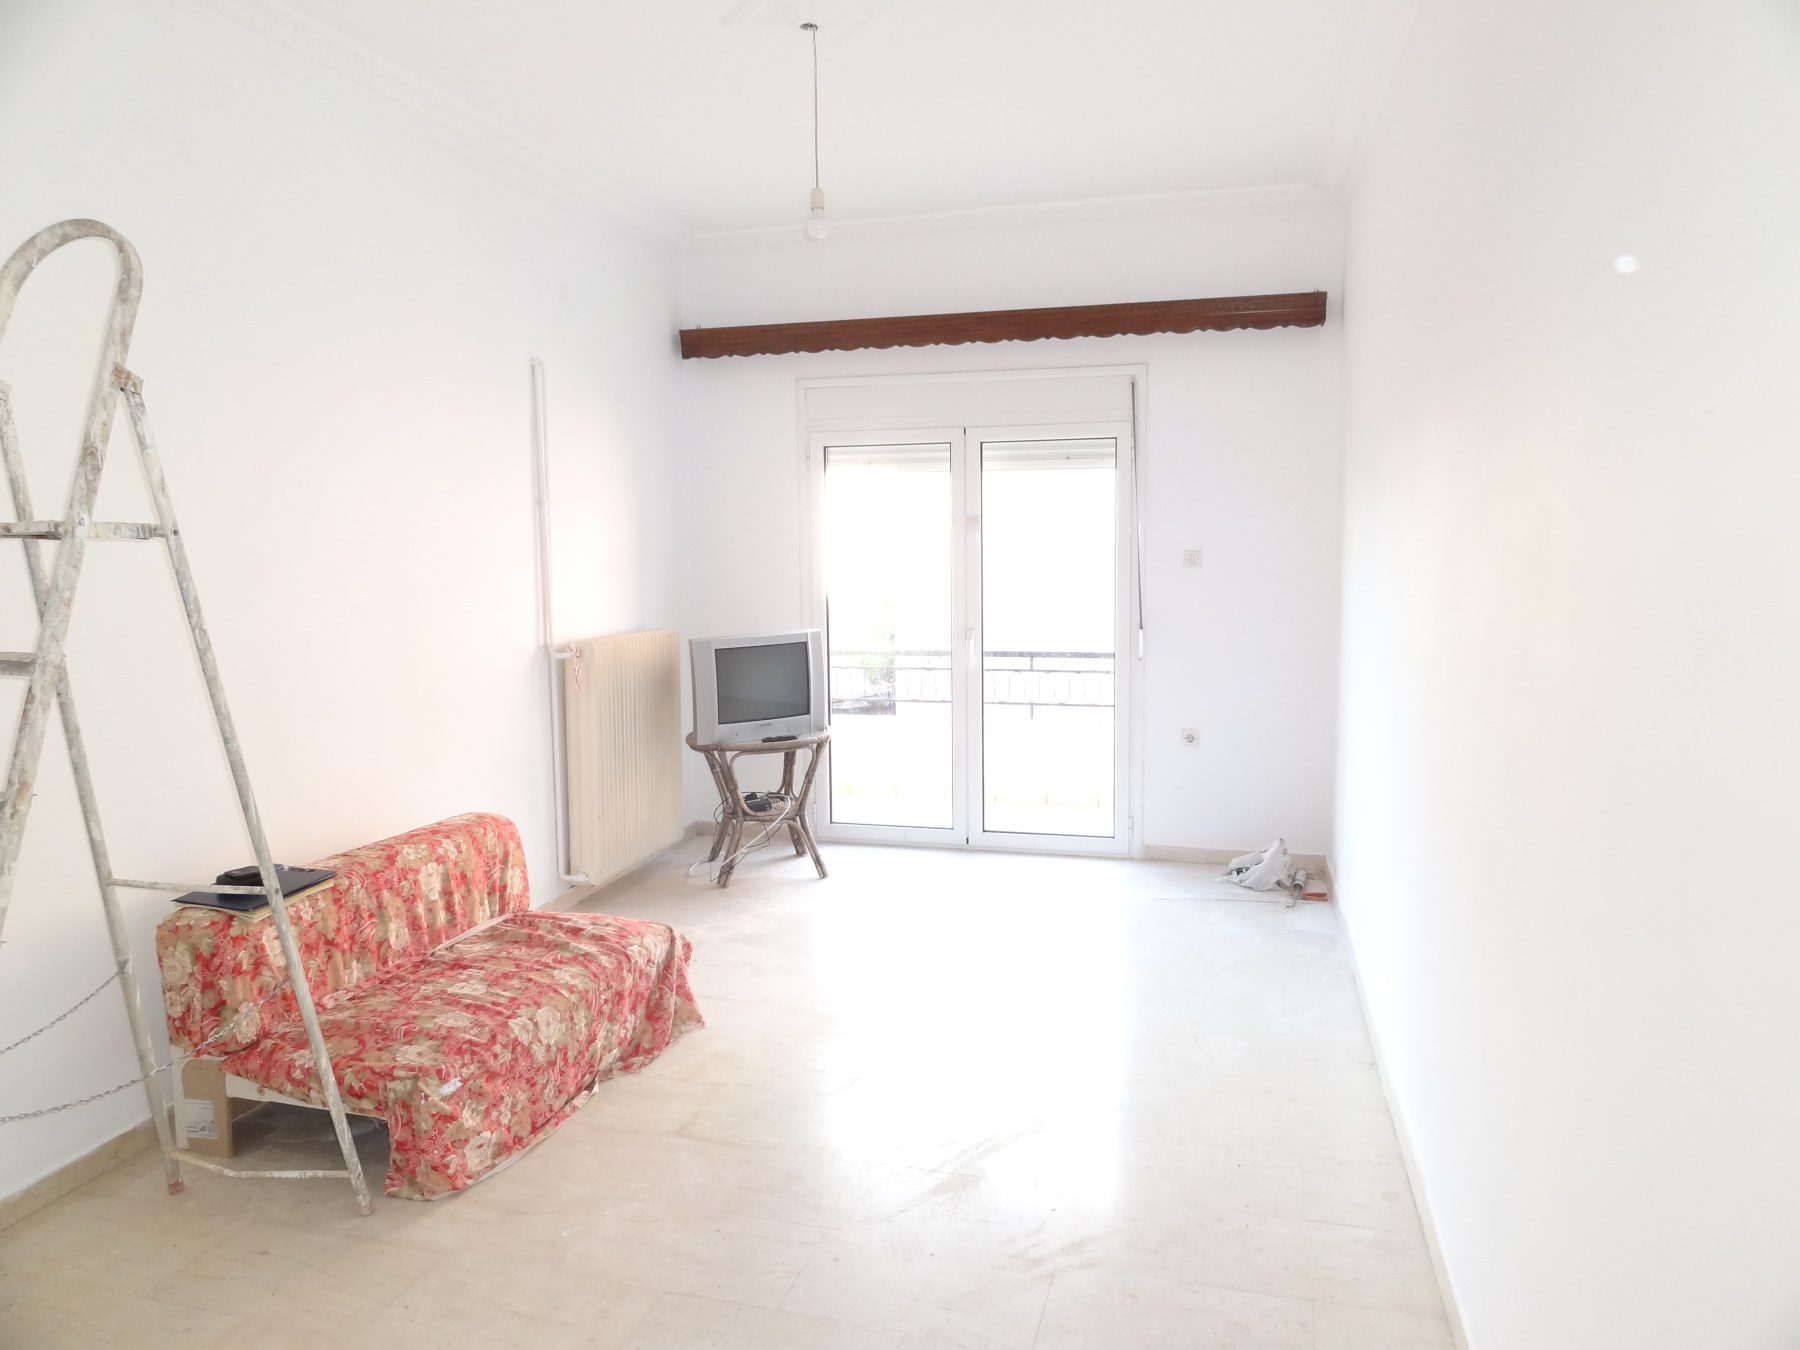 For rent 2 bedrooms bright apartment of 75 sq.m. 1st floor near the Hatzikosta hospital in Ampelokipi, Ioannina